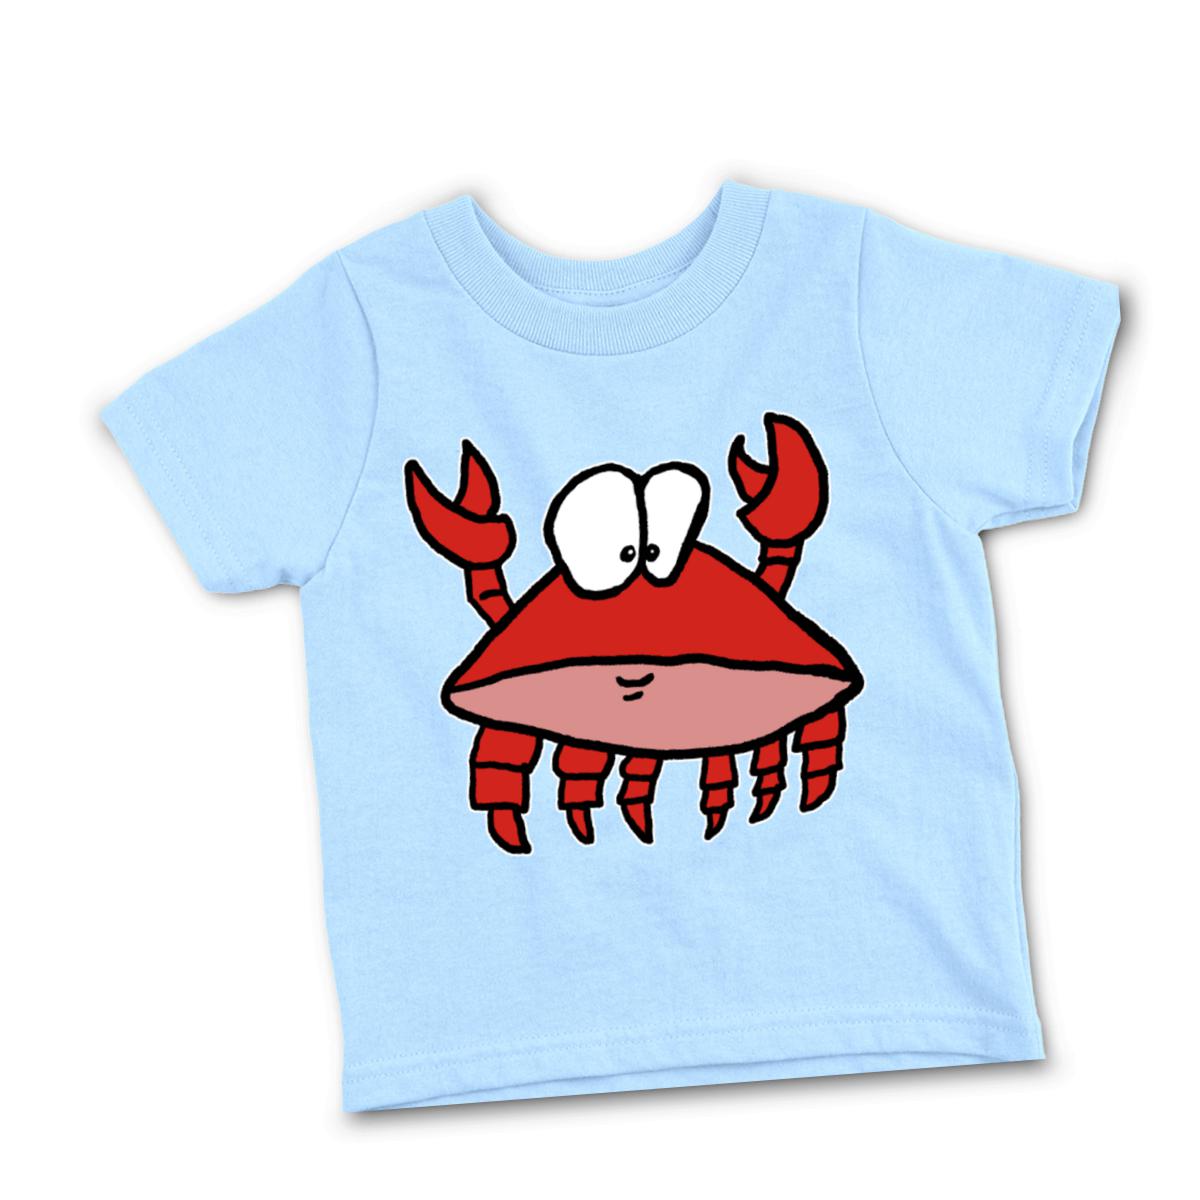 Crab 2.0 Infant Tee 18M light-blue